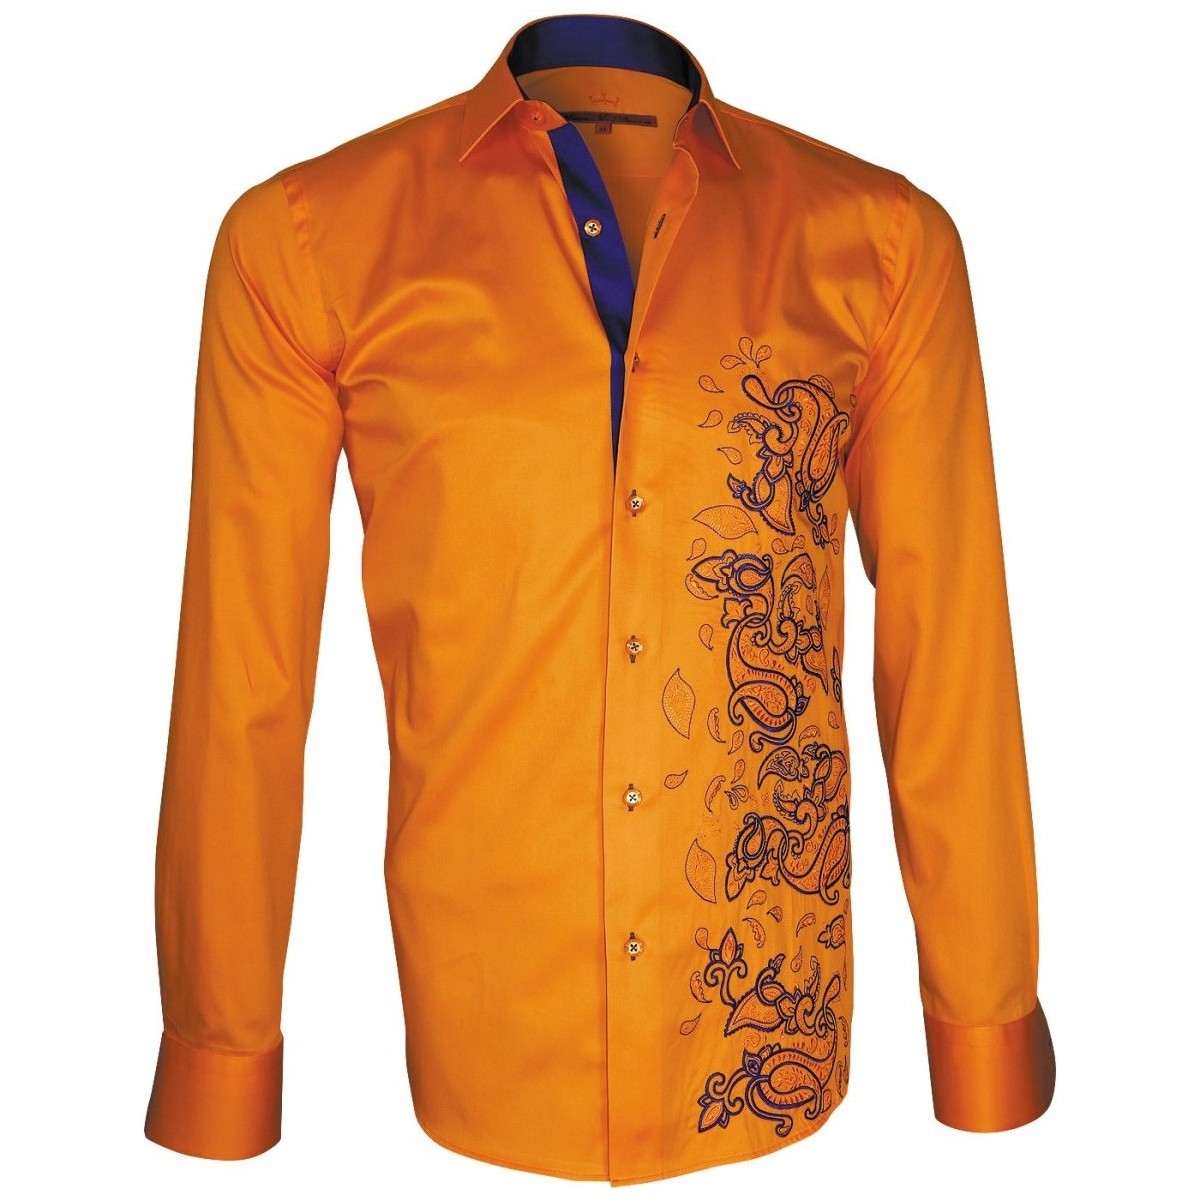 Vêtements Homme Regarde Le Ciel chemise brodee paysley orange Orange